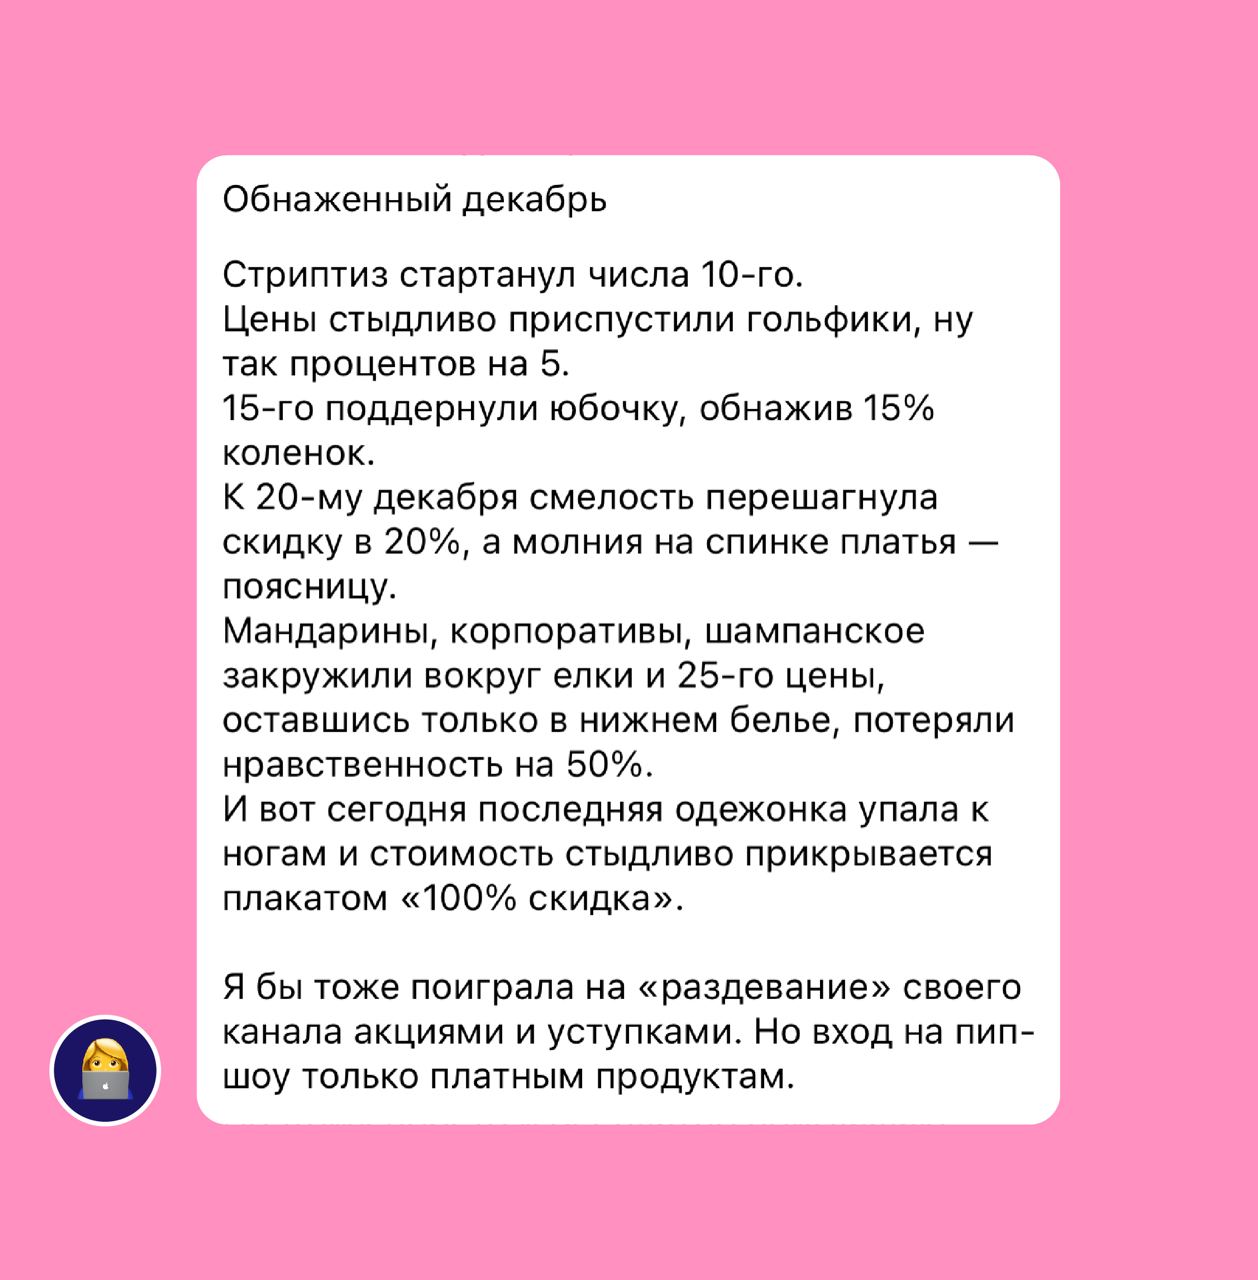 Перевести на русский текст в телеграмме фото 99